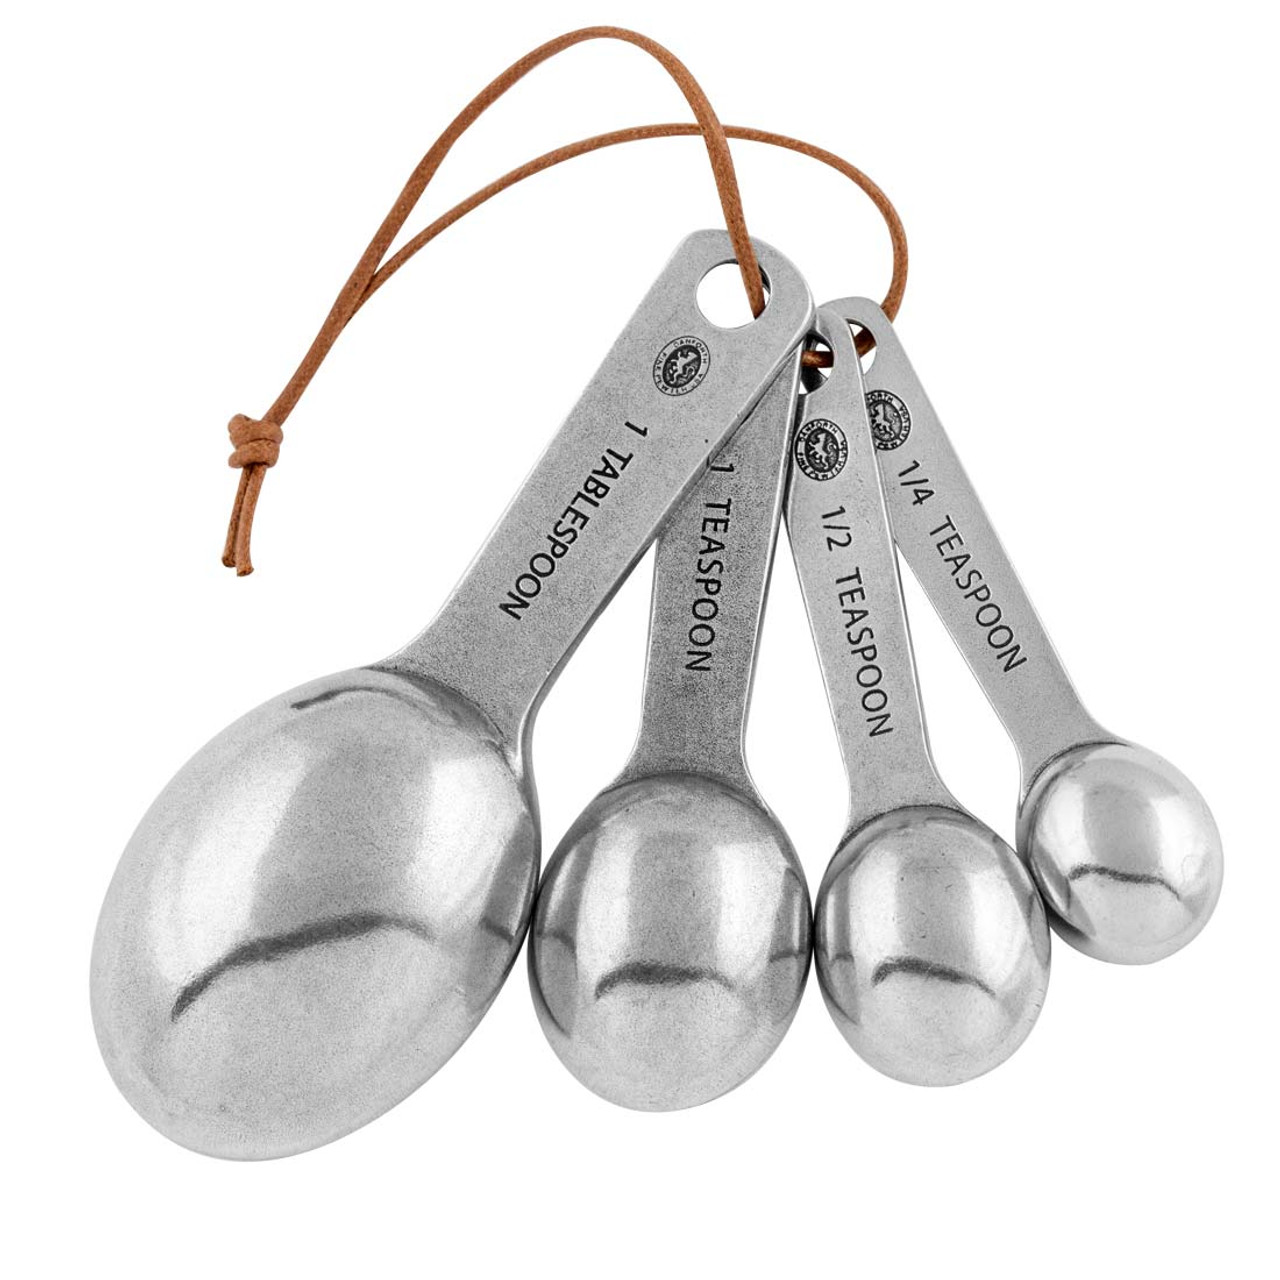 Pewter Measuring Spoons